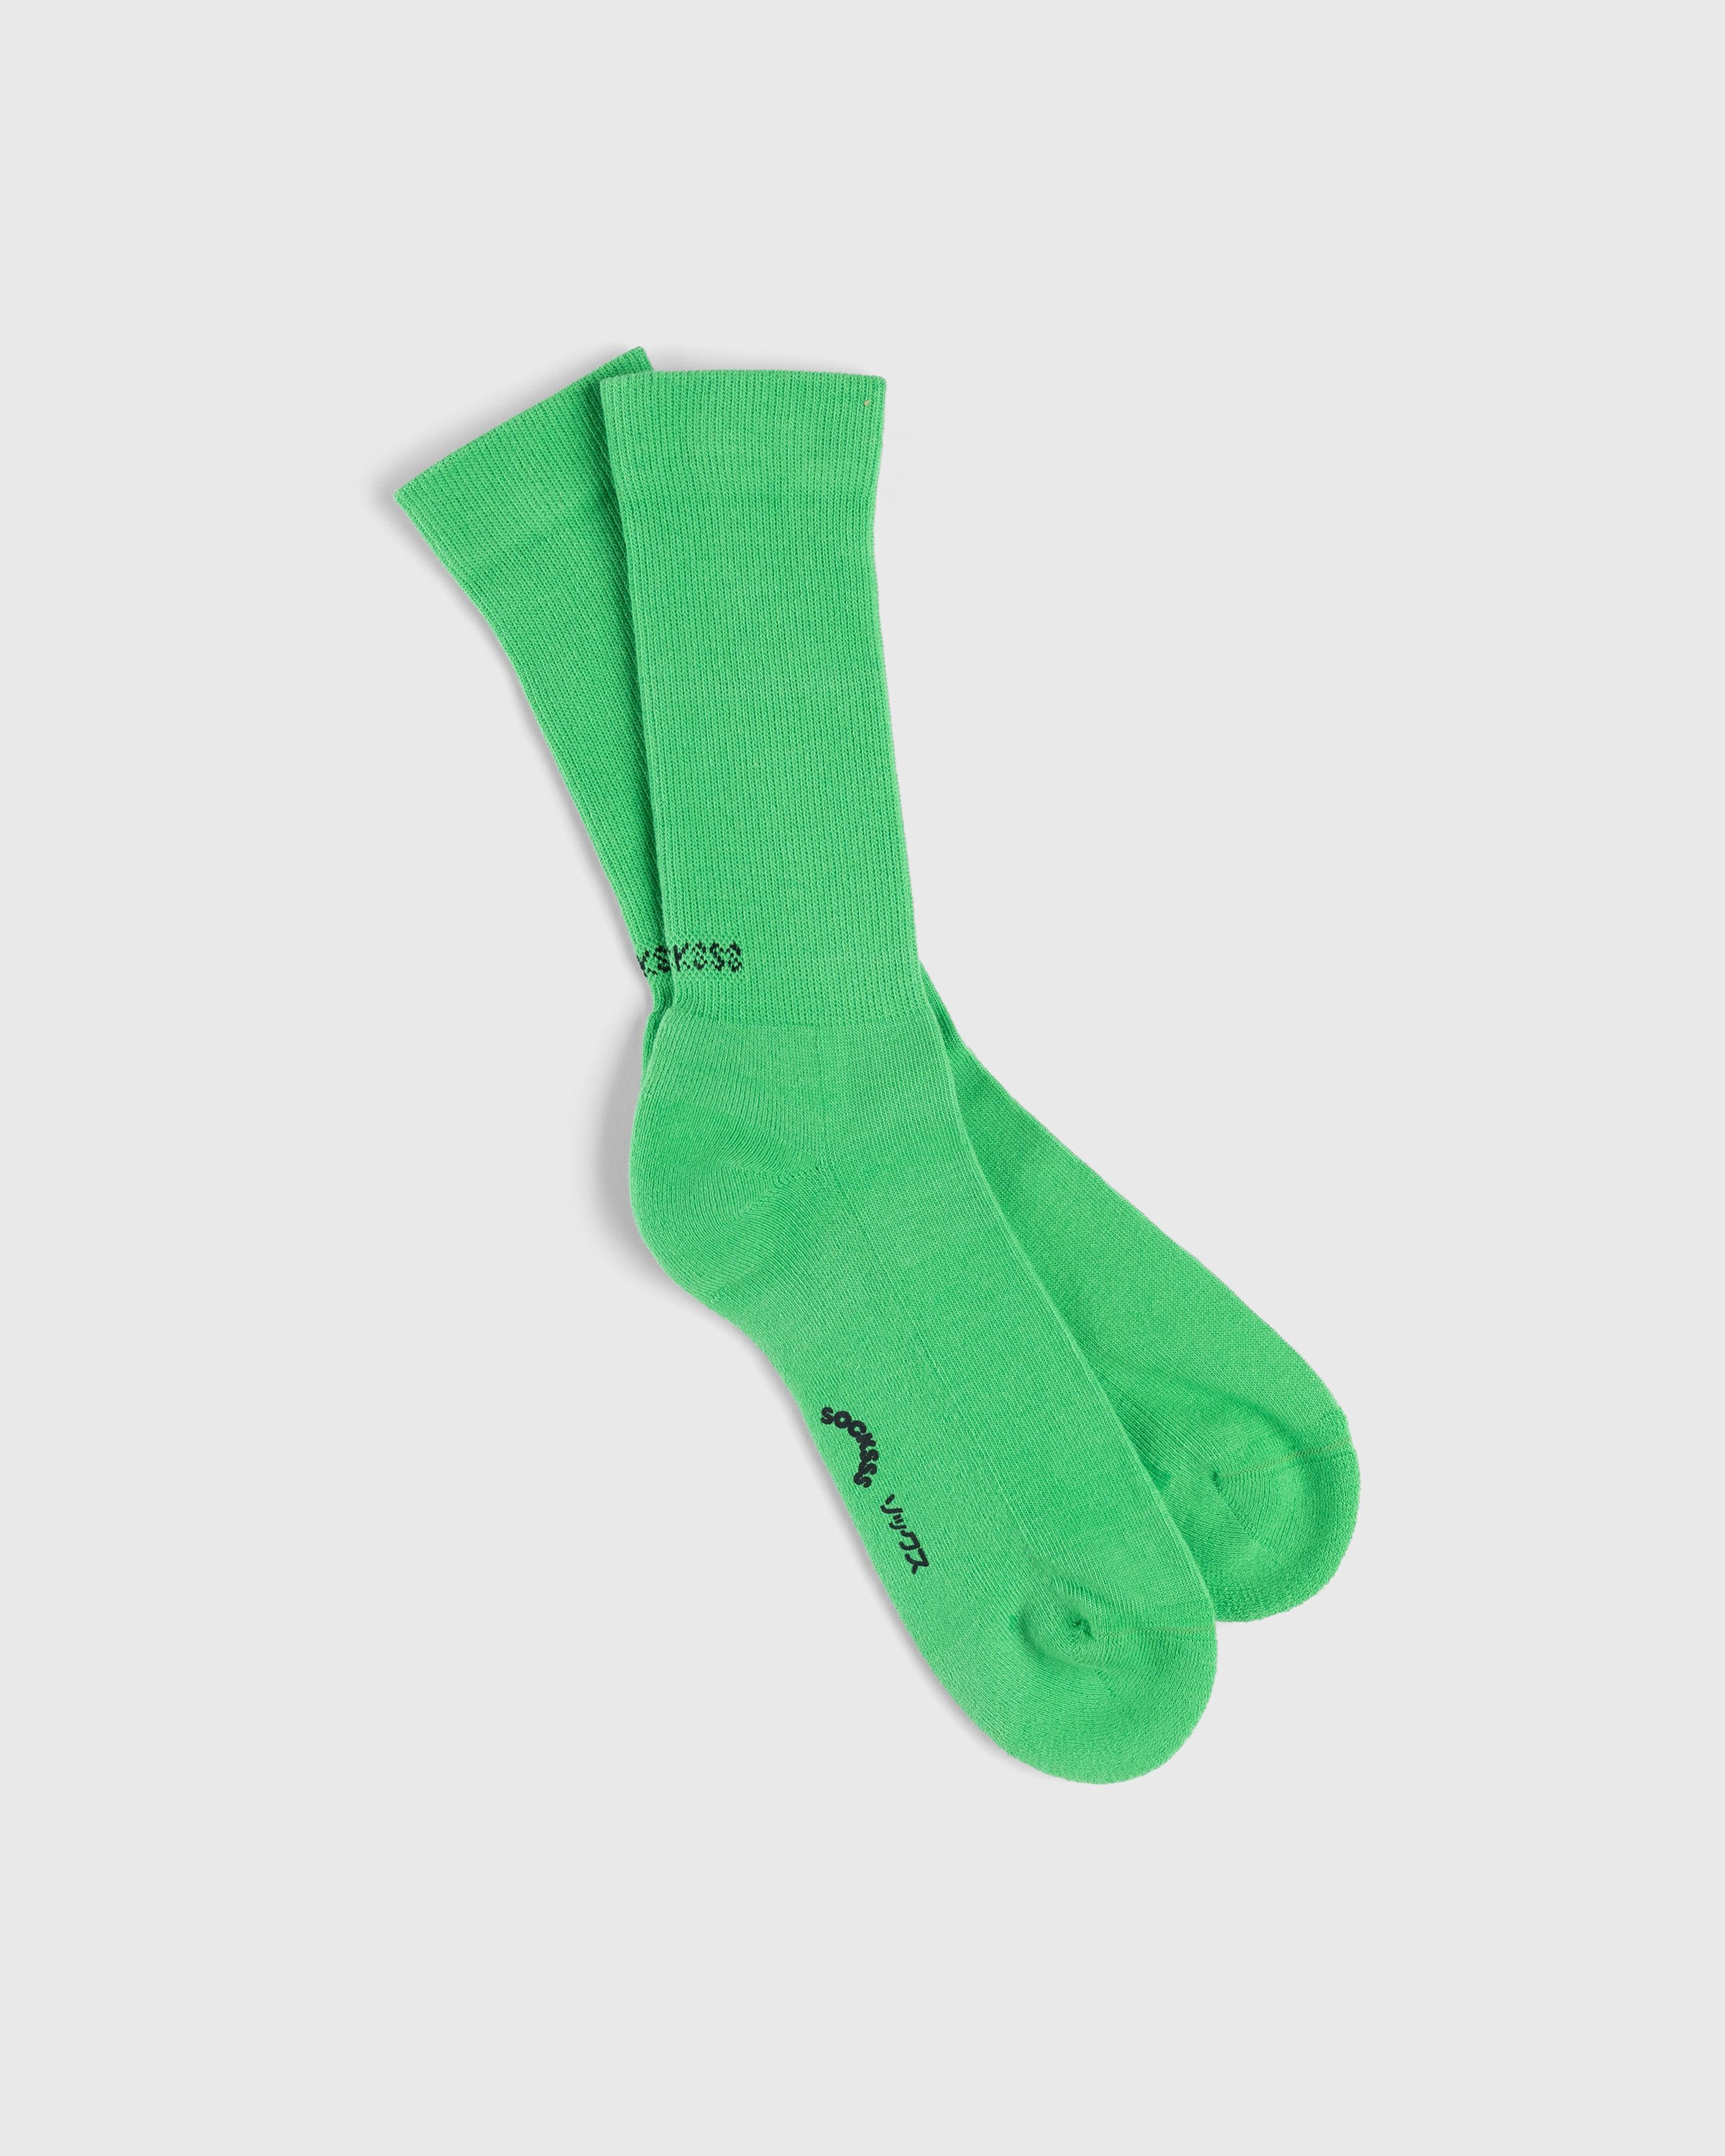 Socksss - Applebottom - Accessories - Green - Image 1